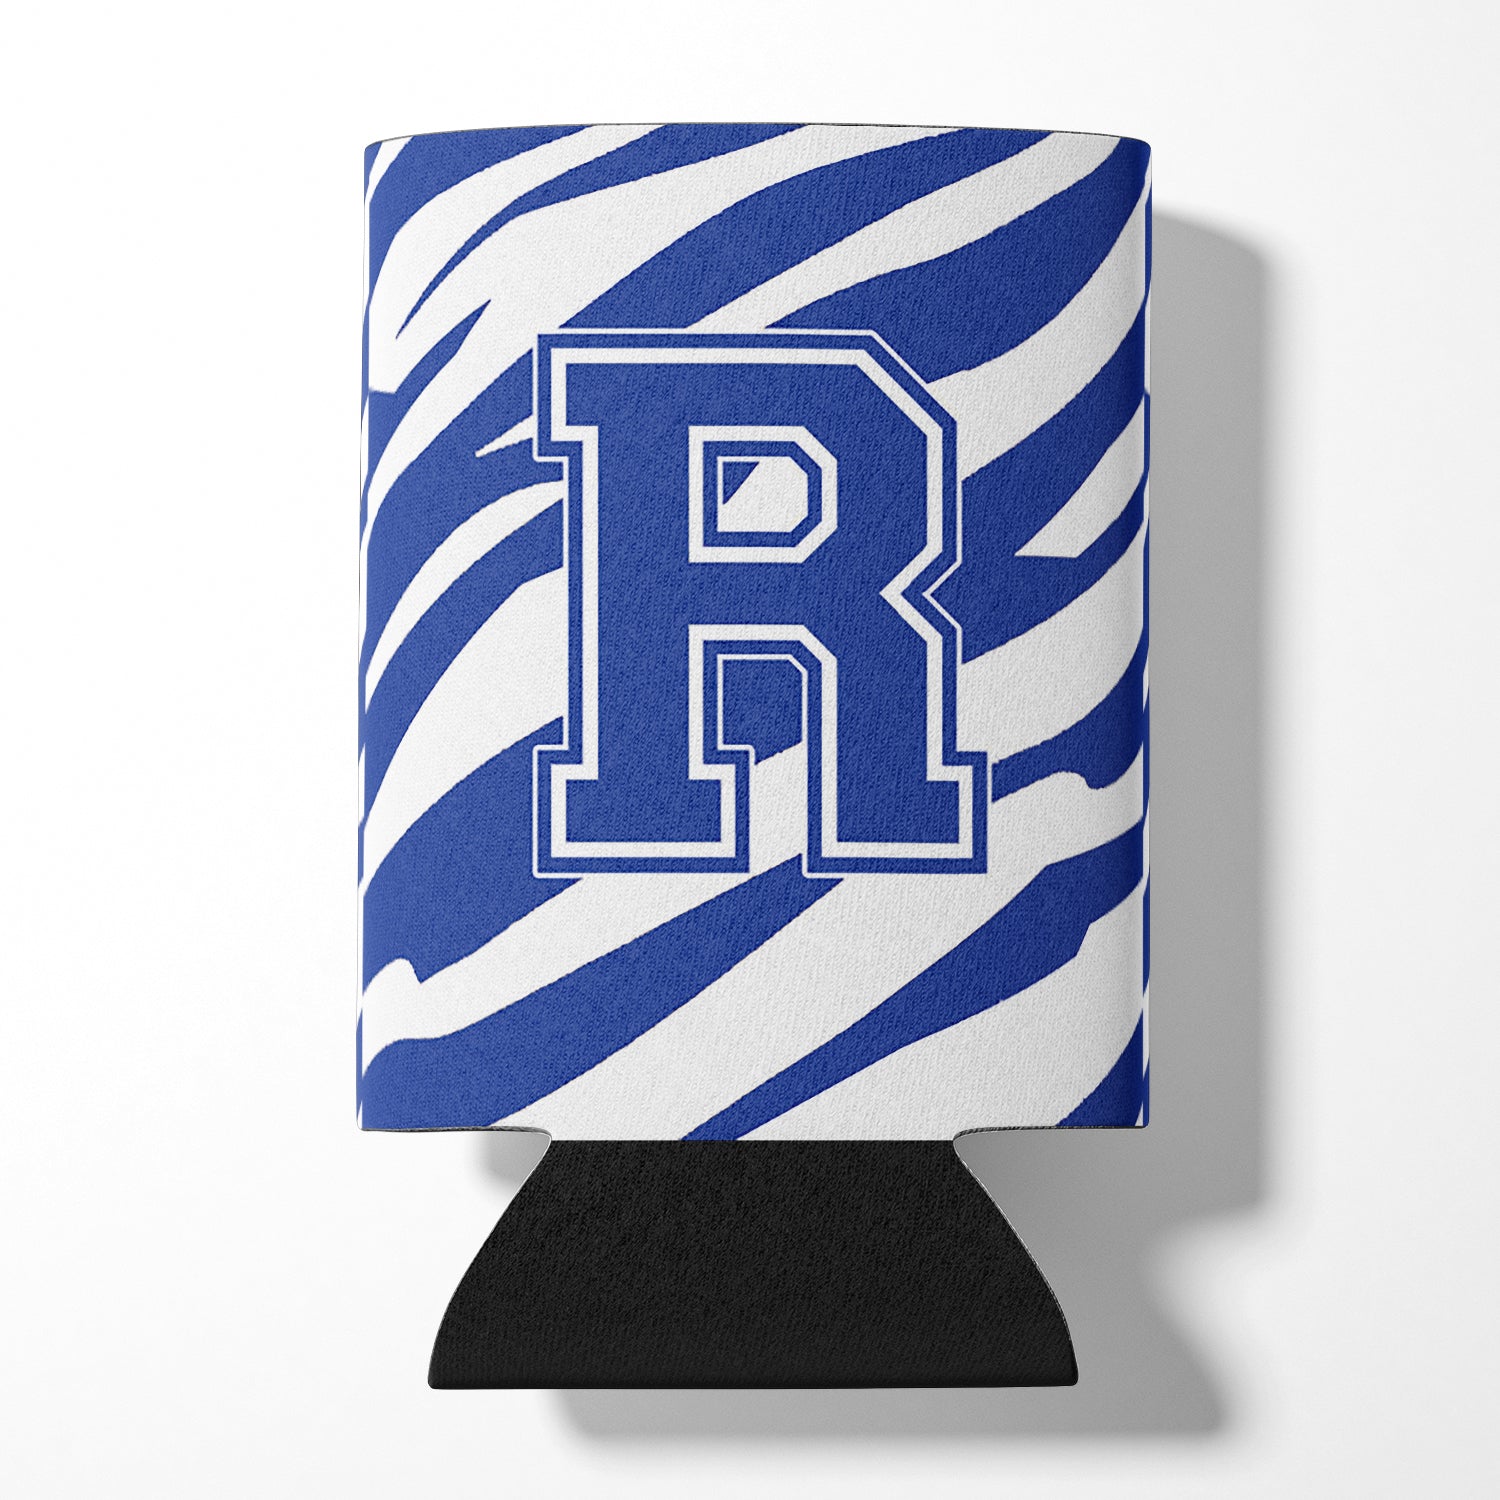 Monogramme initial de la lettre R - Tiger Stripe Blue and White Can Beverage Insulator Hugger